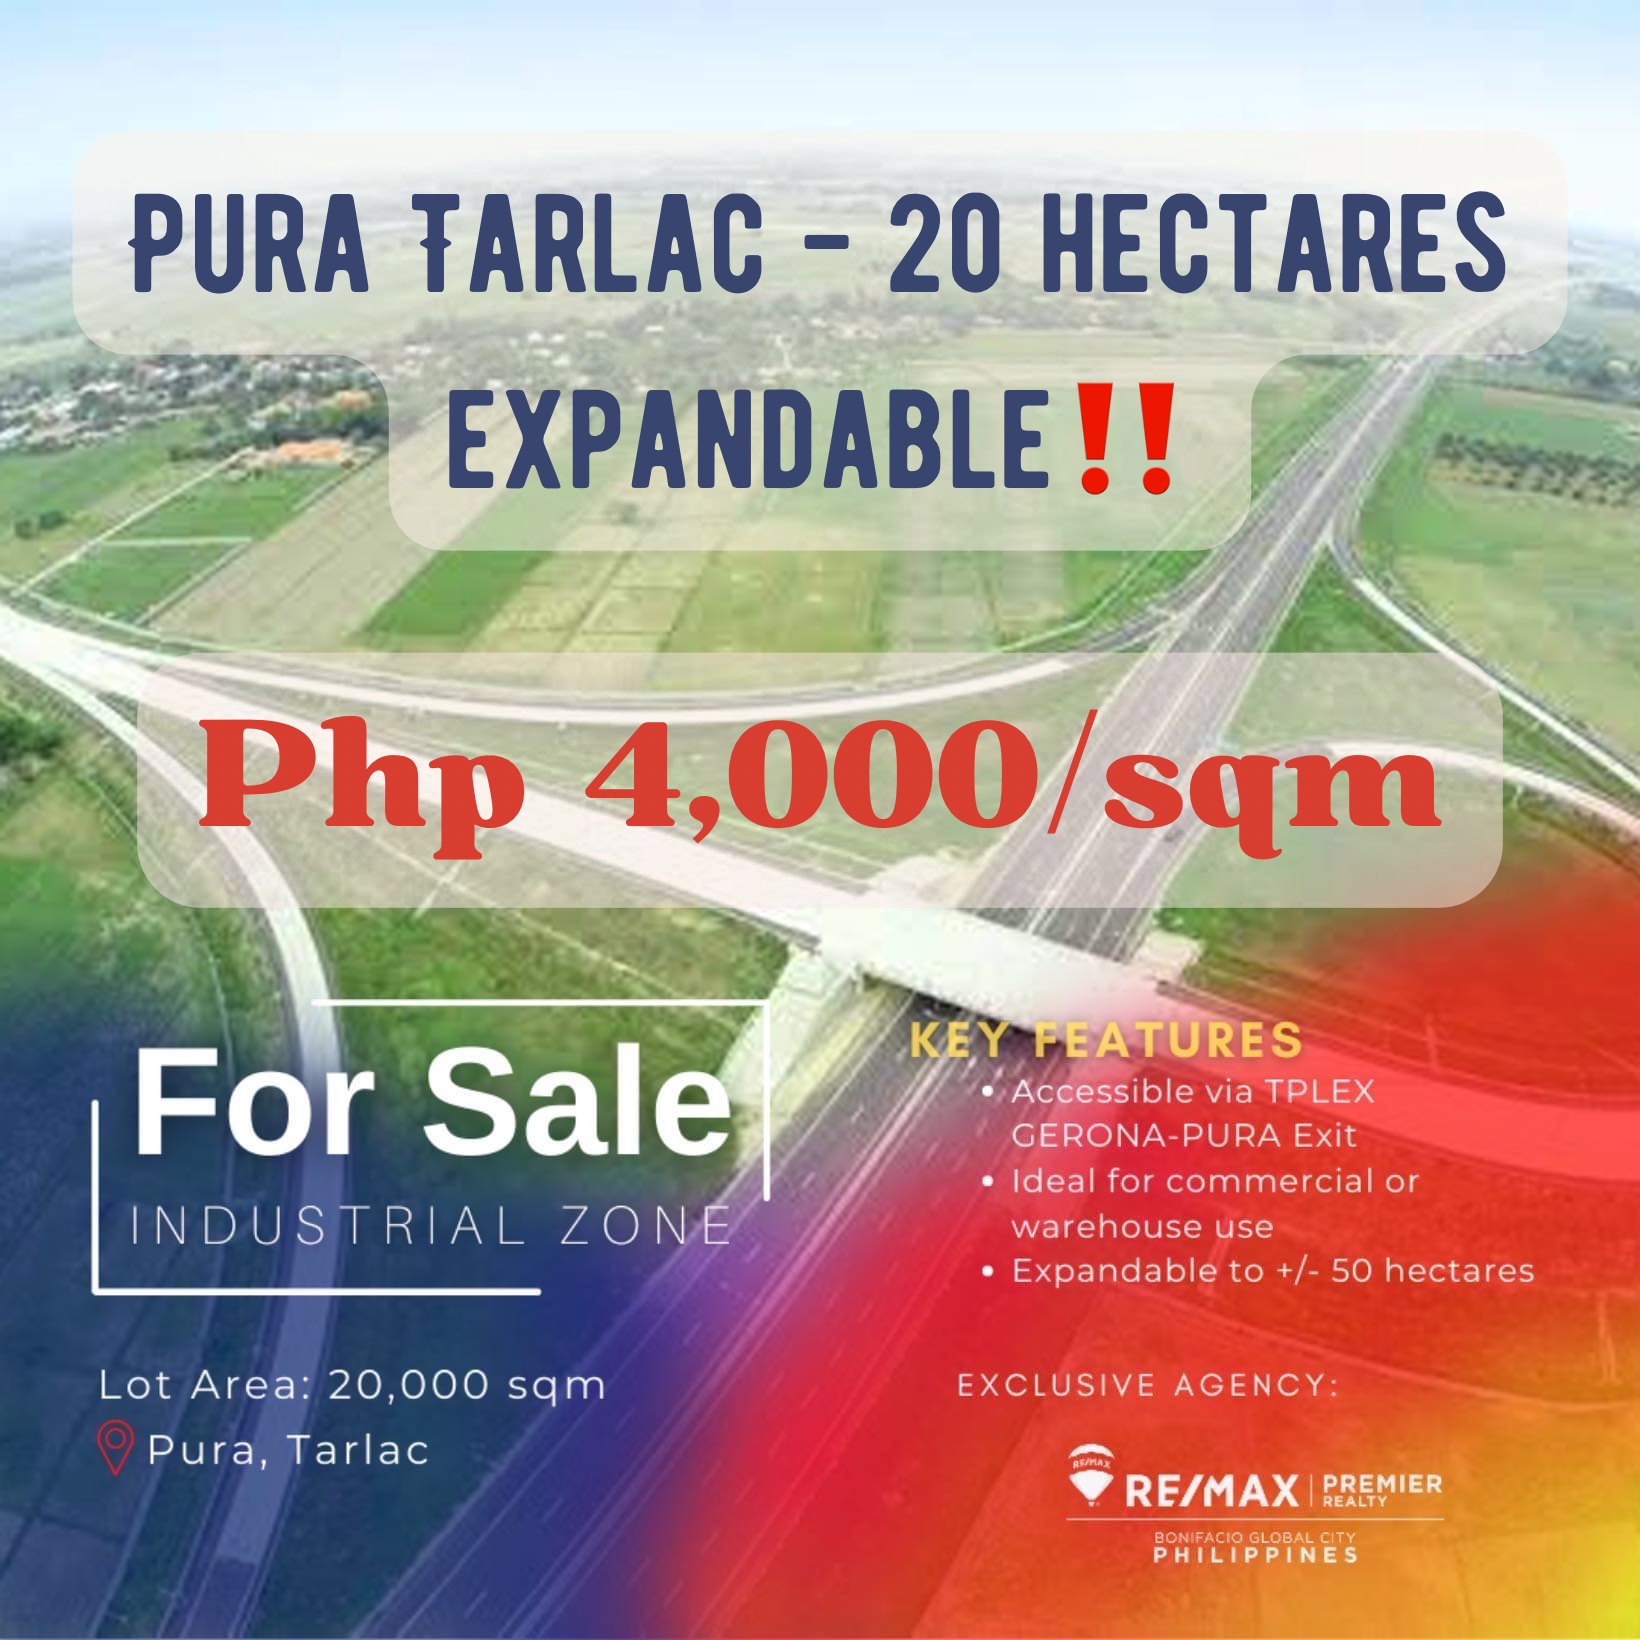 Gerona – Pura Tarlac for Sale 20 hectares expandable‼️